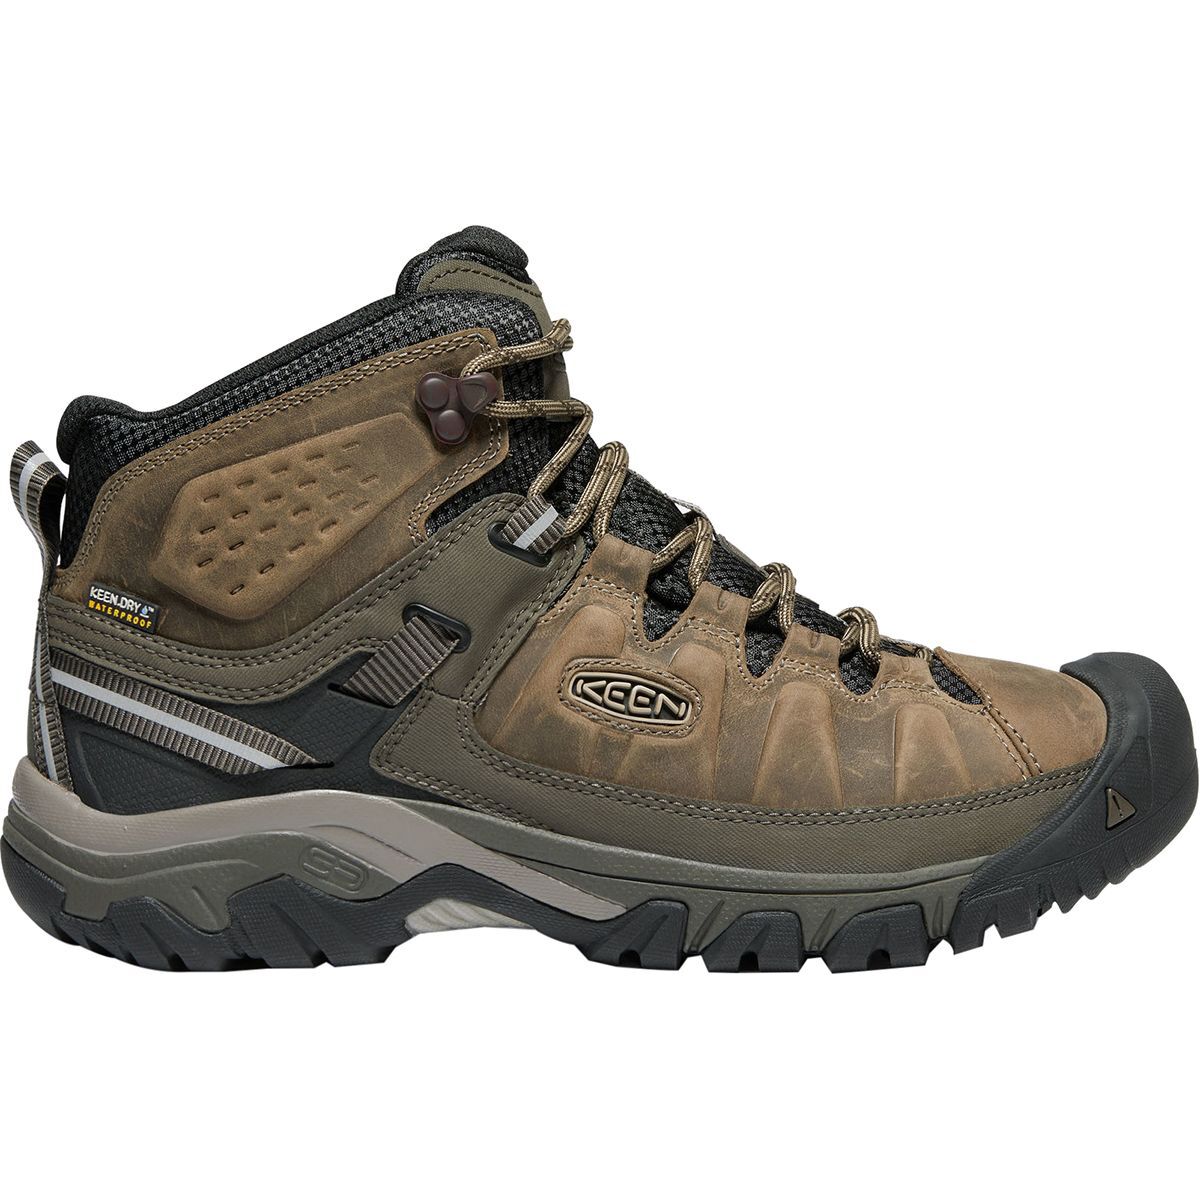 KEEN Targhee III Mid Leather Waterproof Hiking Boot - Men's